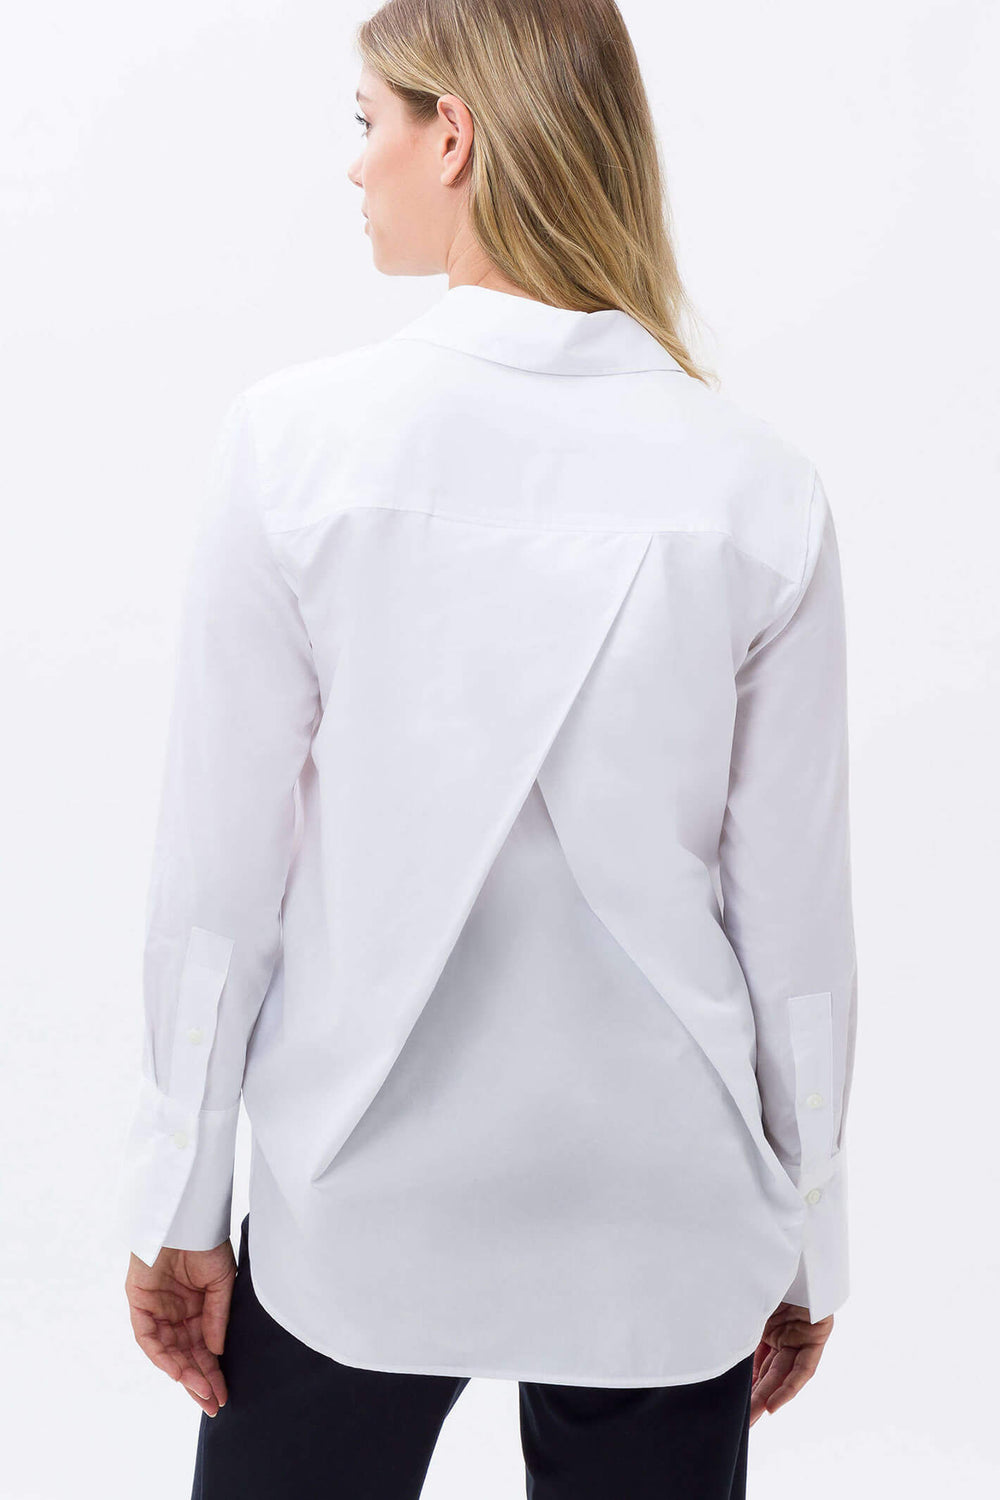 Brax Vicki 43-5068 94123800 99 White Crossover Back Shirt- Olivia Grace Fashion